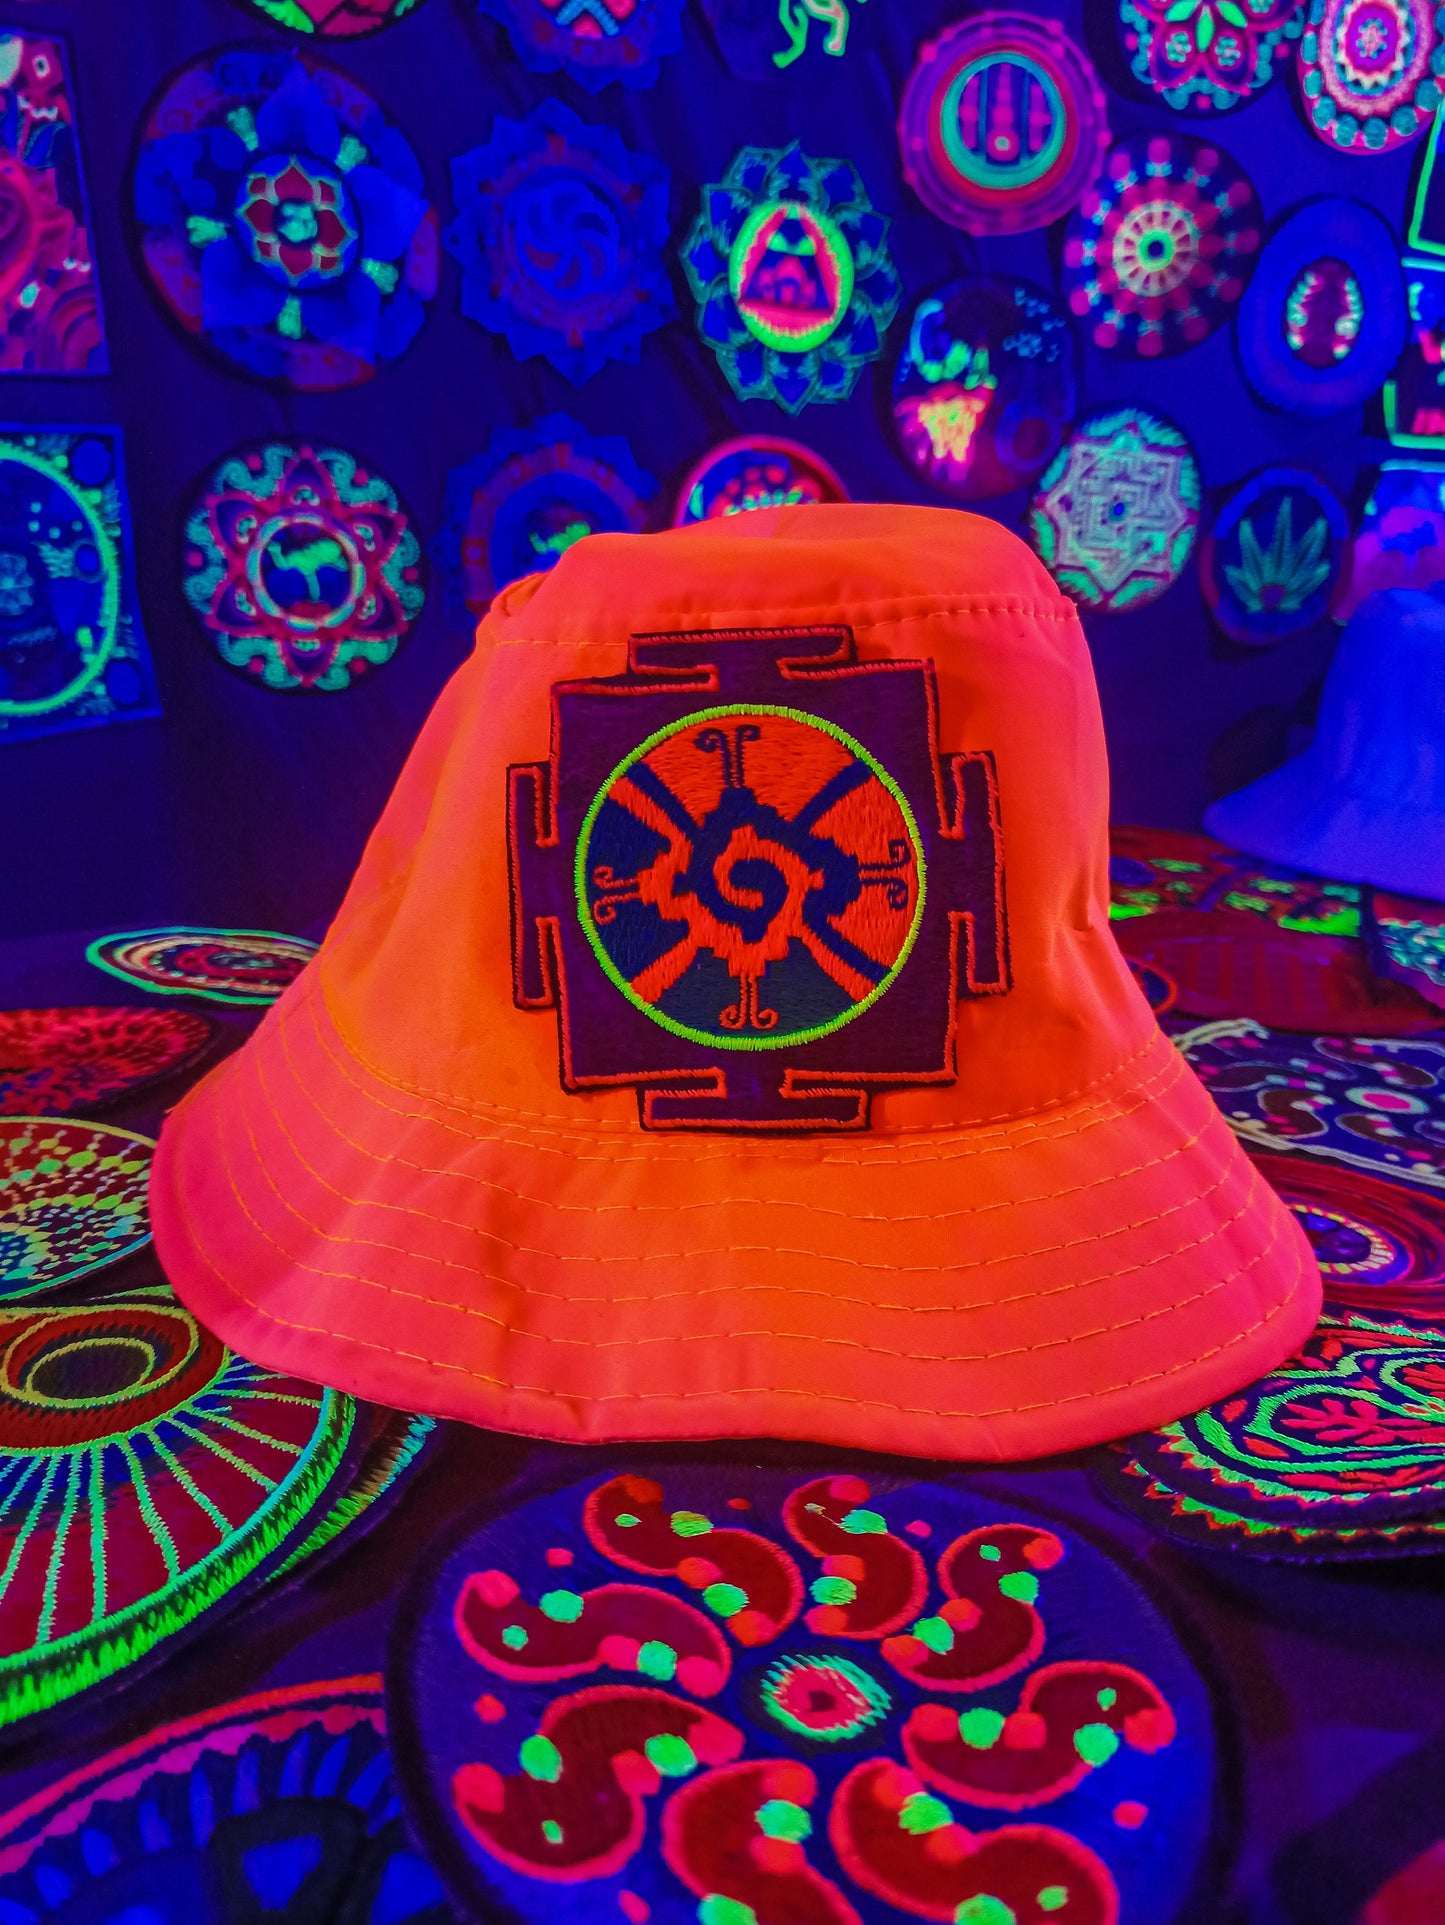 Hunab Ku UV Orange Fisher Hat blacklight glowing with embroidery patch sacred center of galaxy the one god Unity of Dualism Maya Calendar